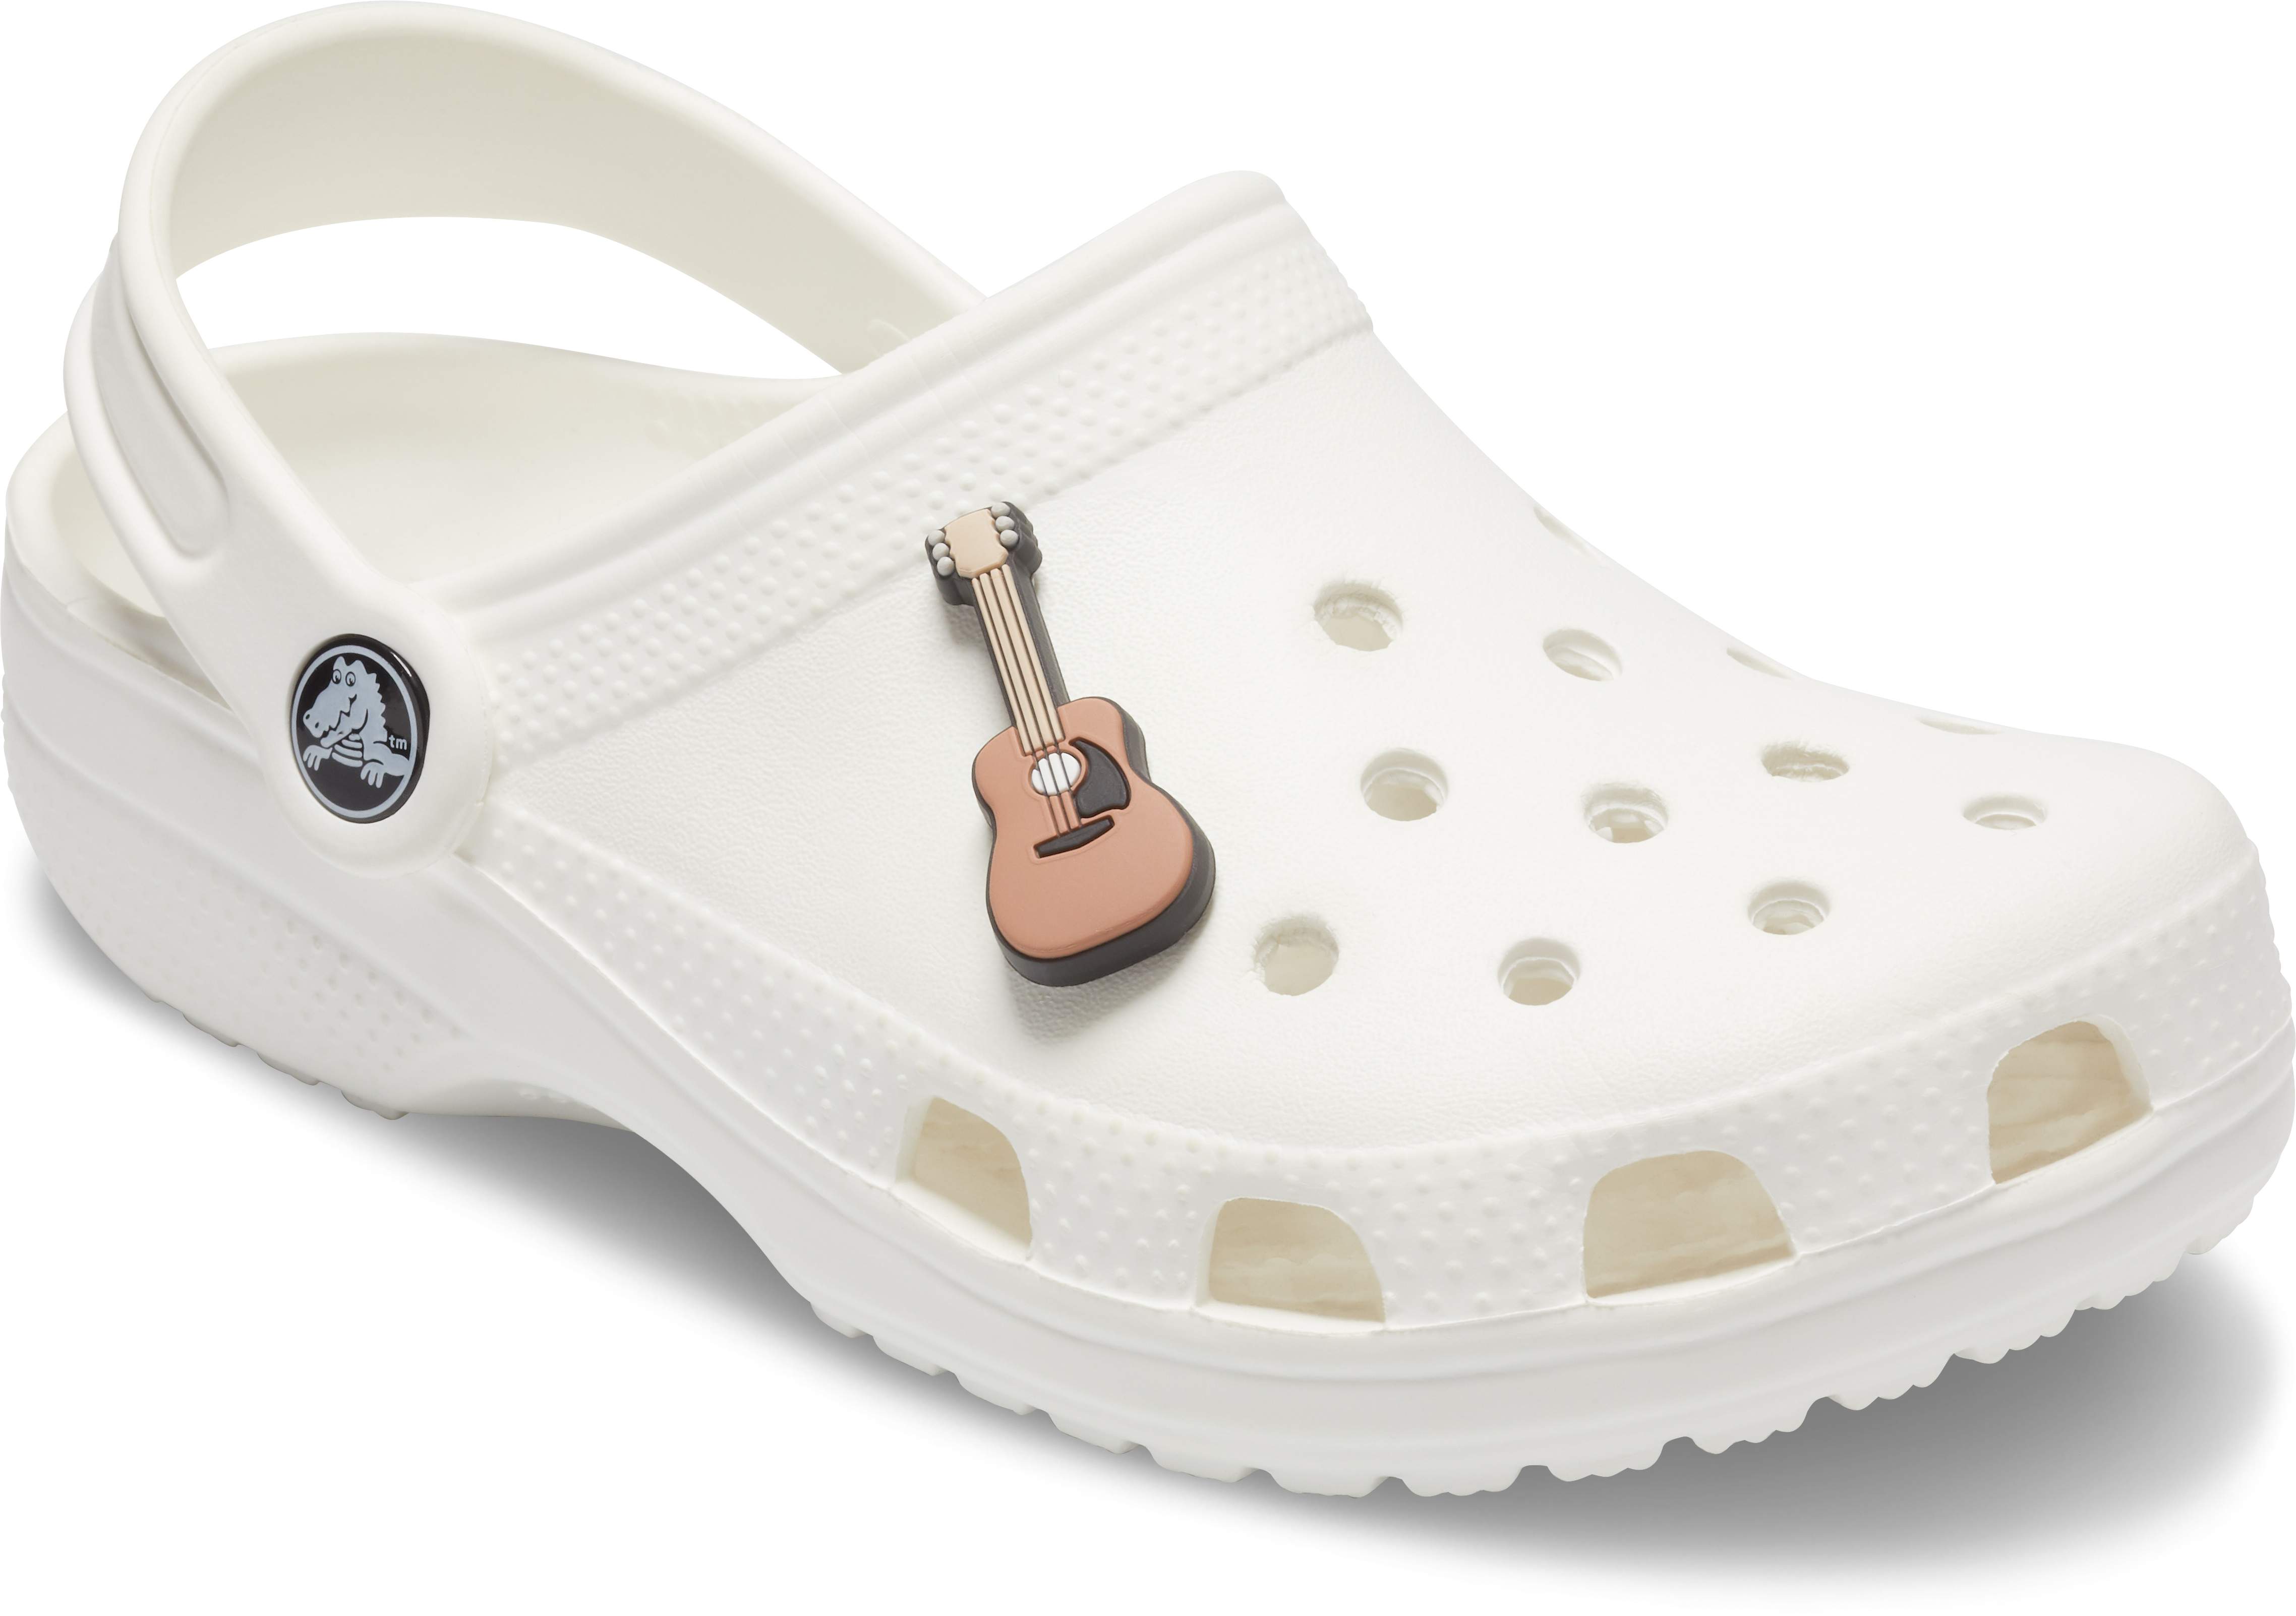 Guitar Jibbitz Shoe Charm - Crocs